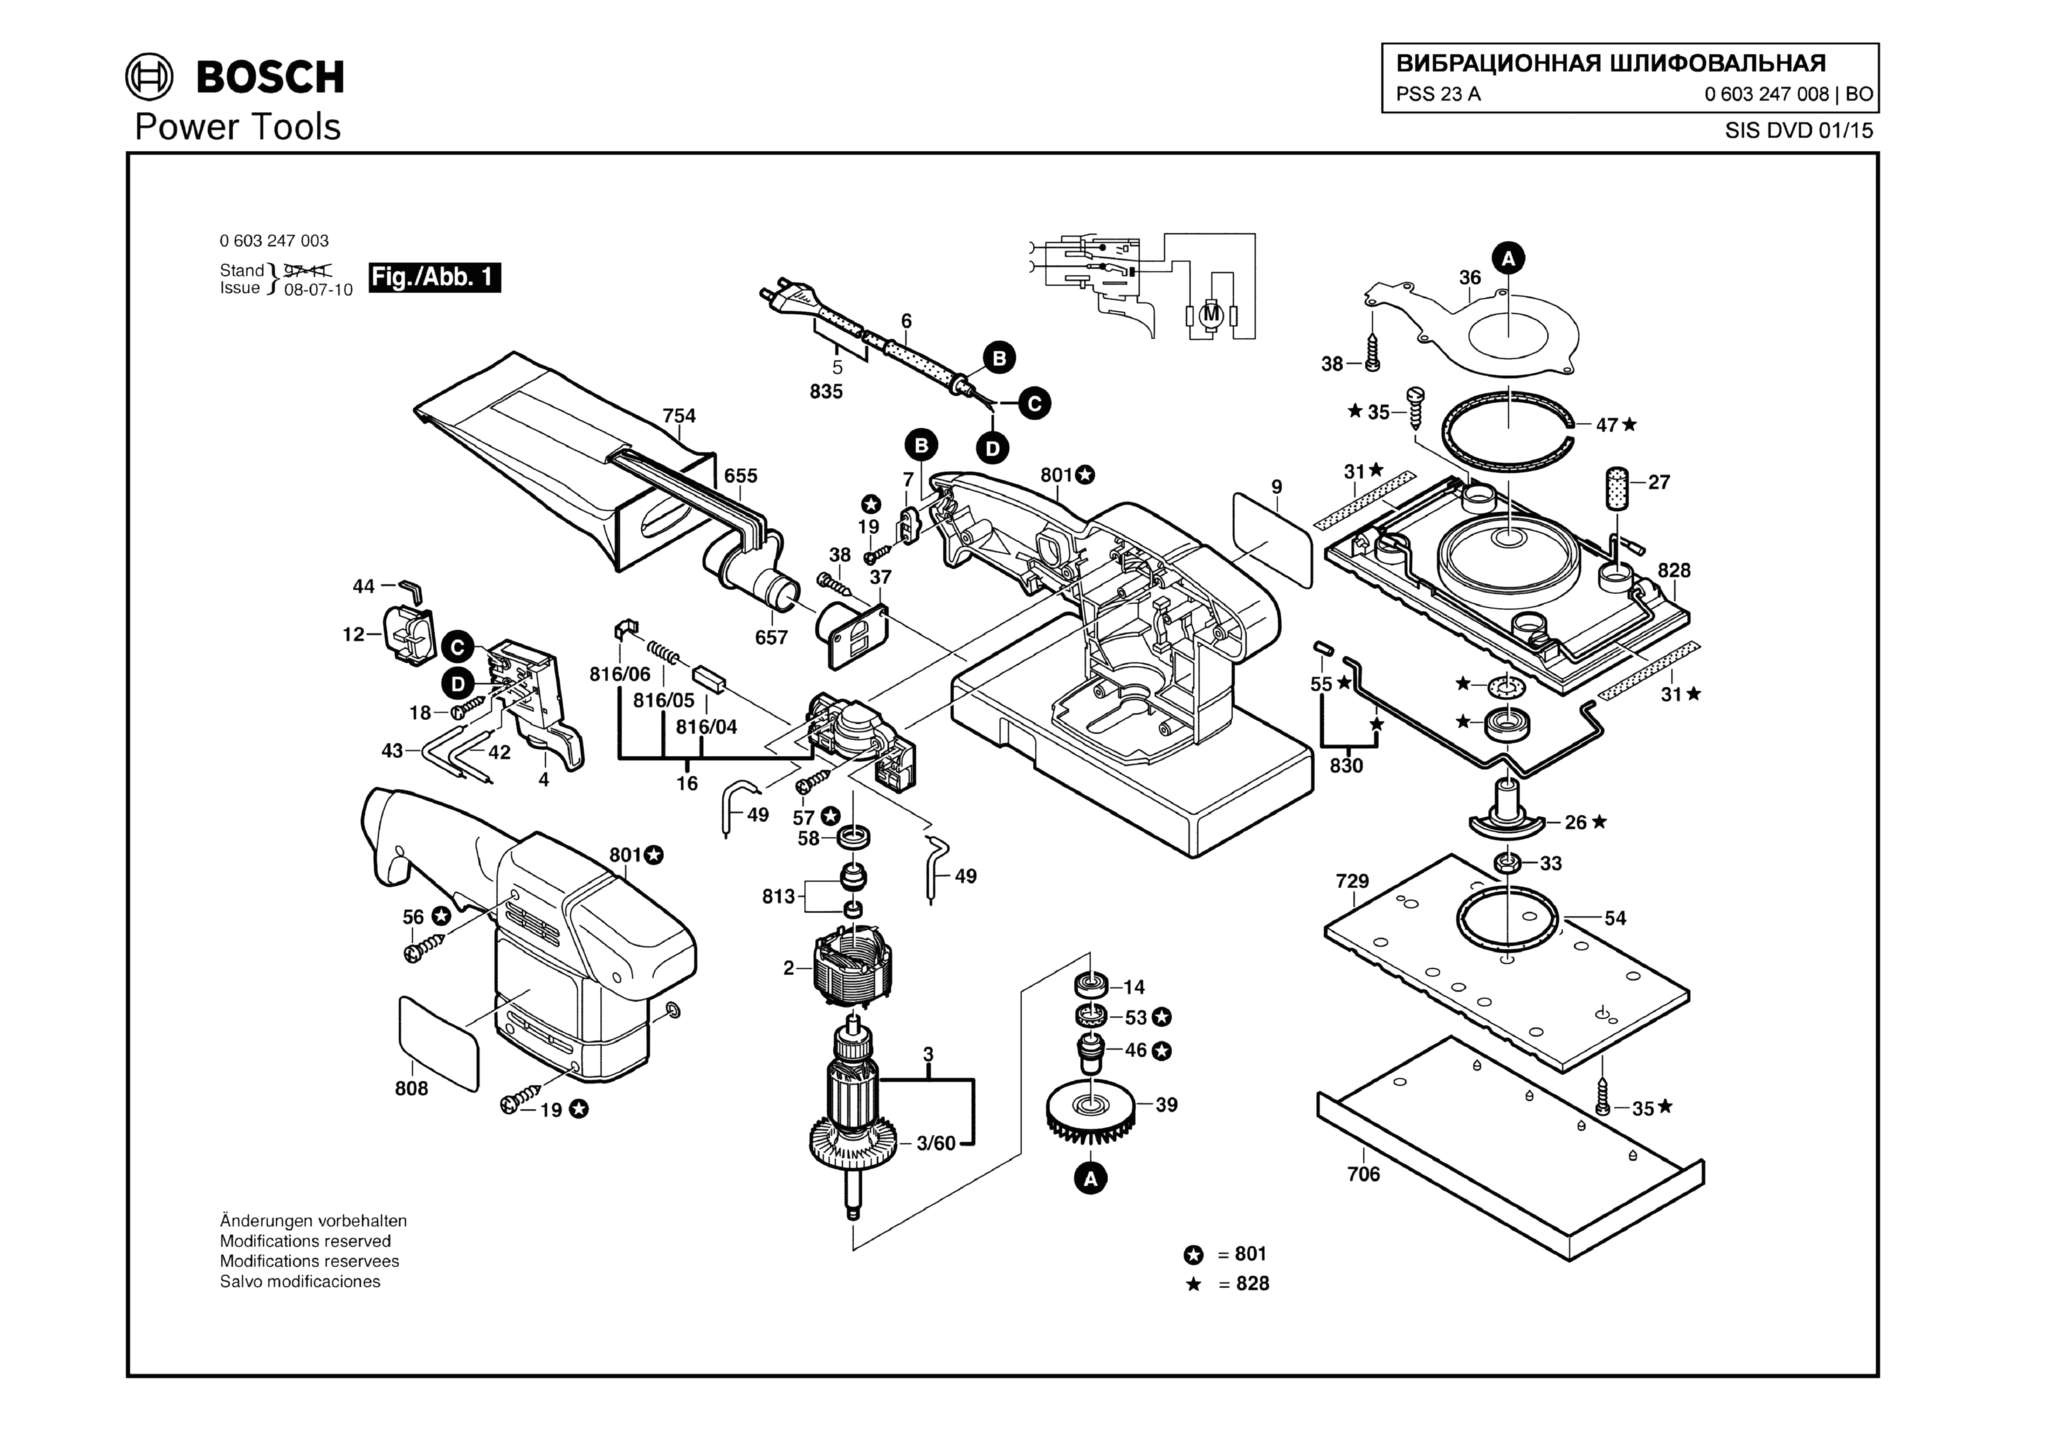 Запчасти, схема и деталировка Bosch PSS 23 A (ТИП 0603247008)